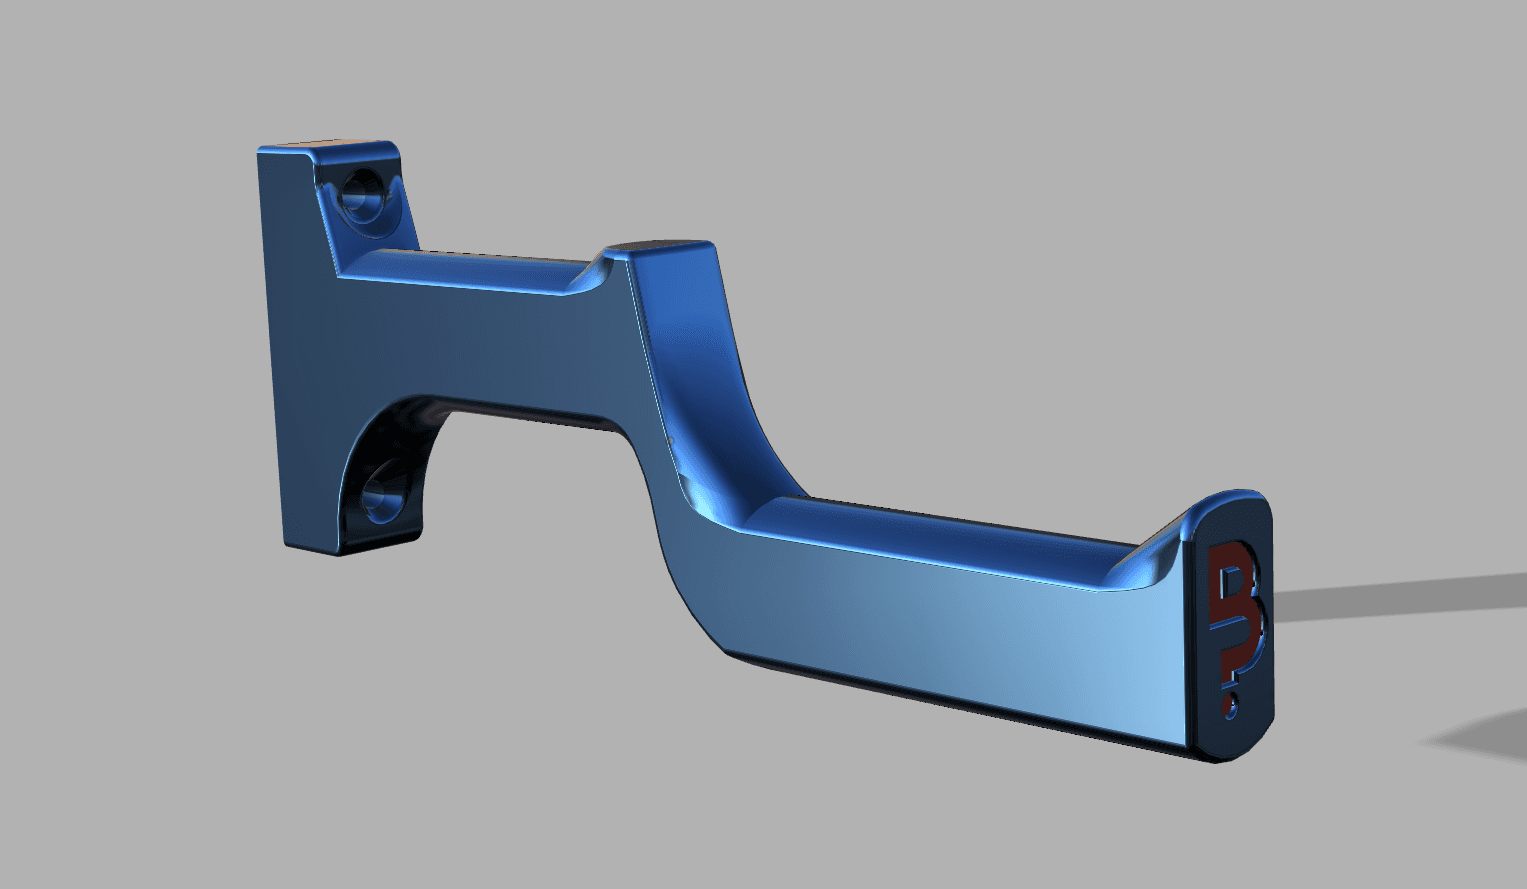 Filament Spool Storage Holder Arm.step 3d model